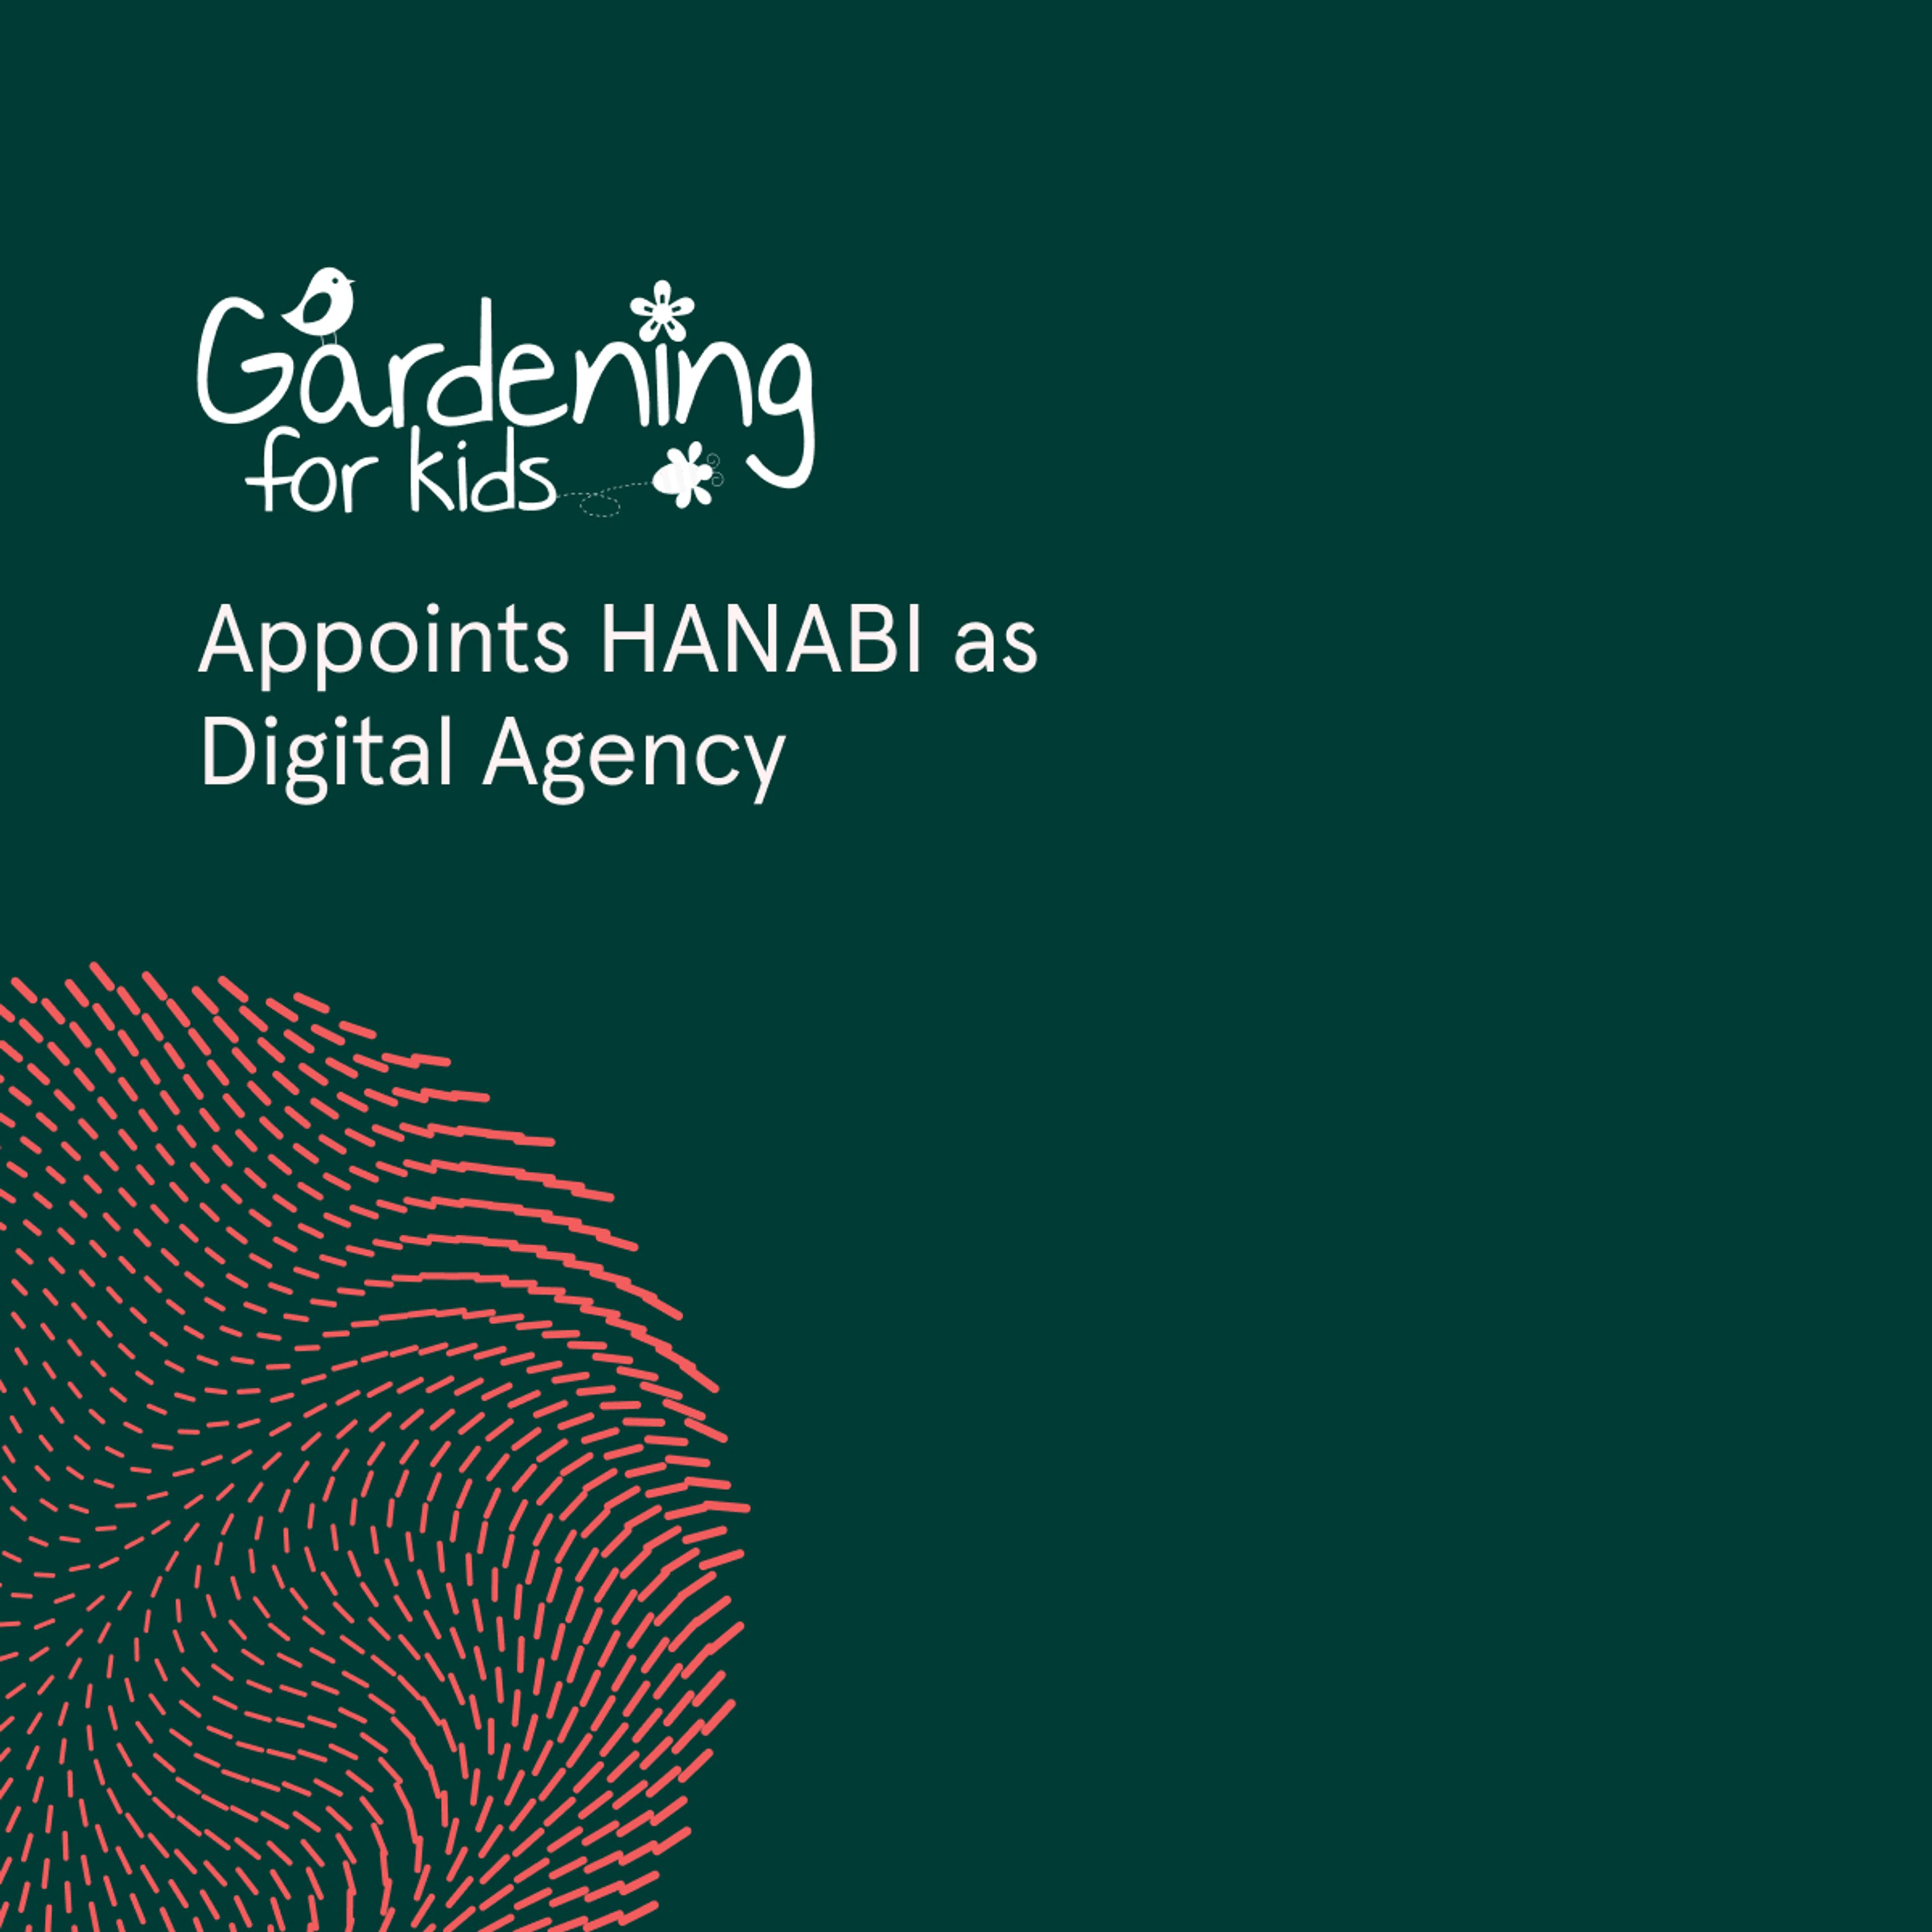 Gardening for Kids Appoints Hanabi for Digital Marketing Services